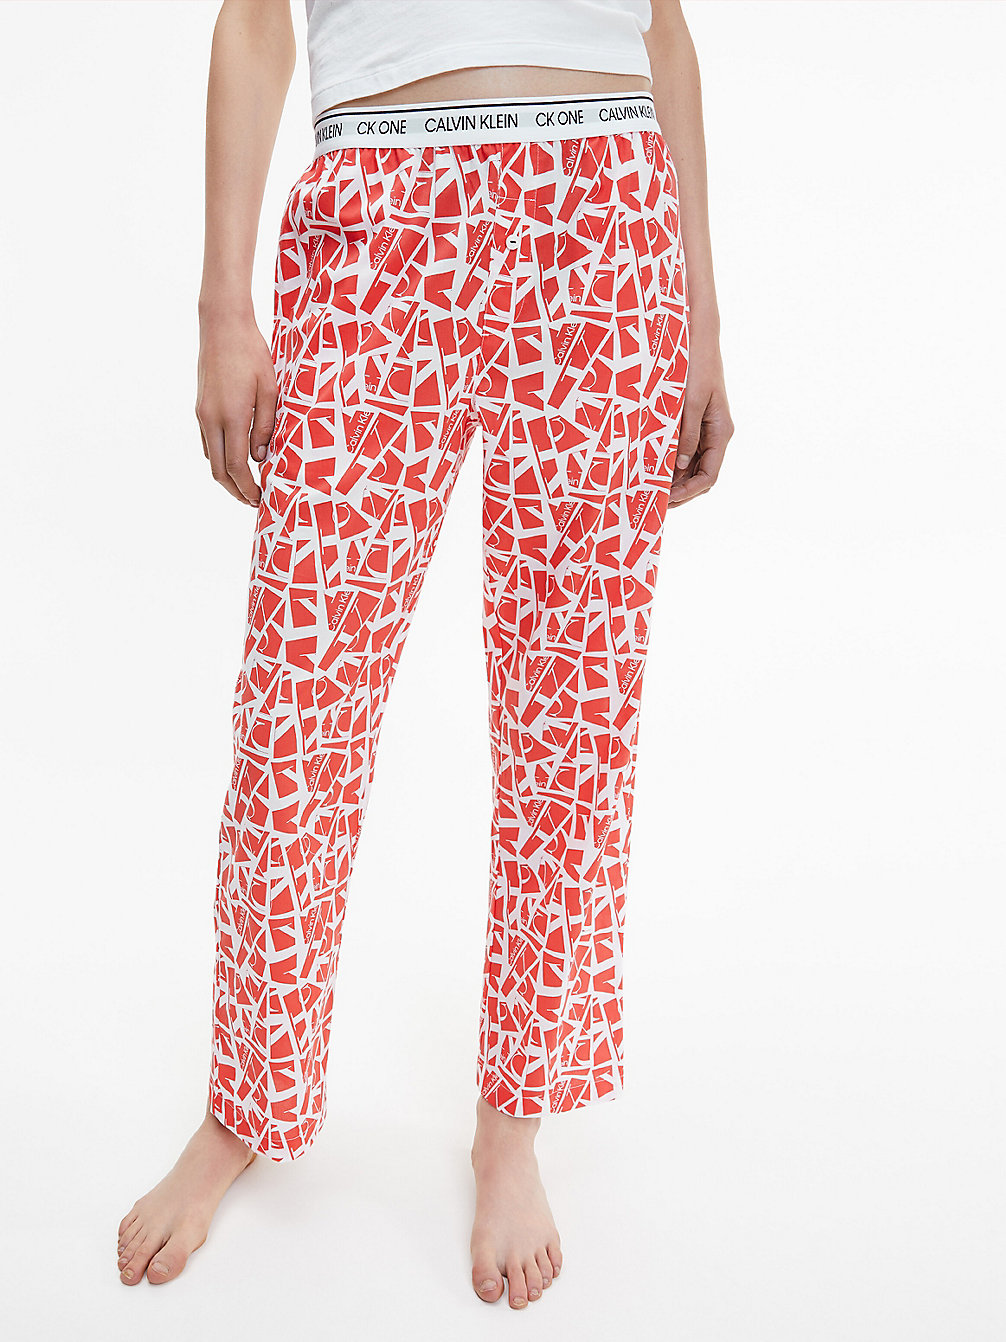 Pantalon De Pyjama - CK One > SLICED LOGO PRINT_ORANGE ODYSSEY > undefined femmes > Calvin Klein